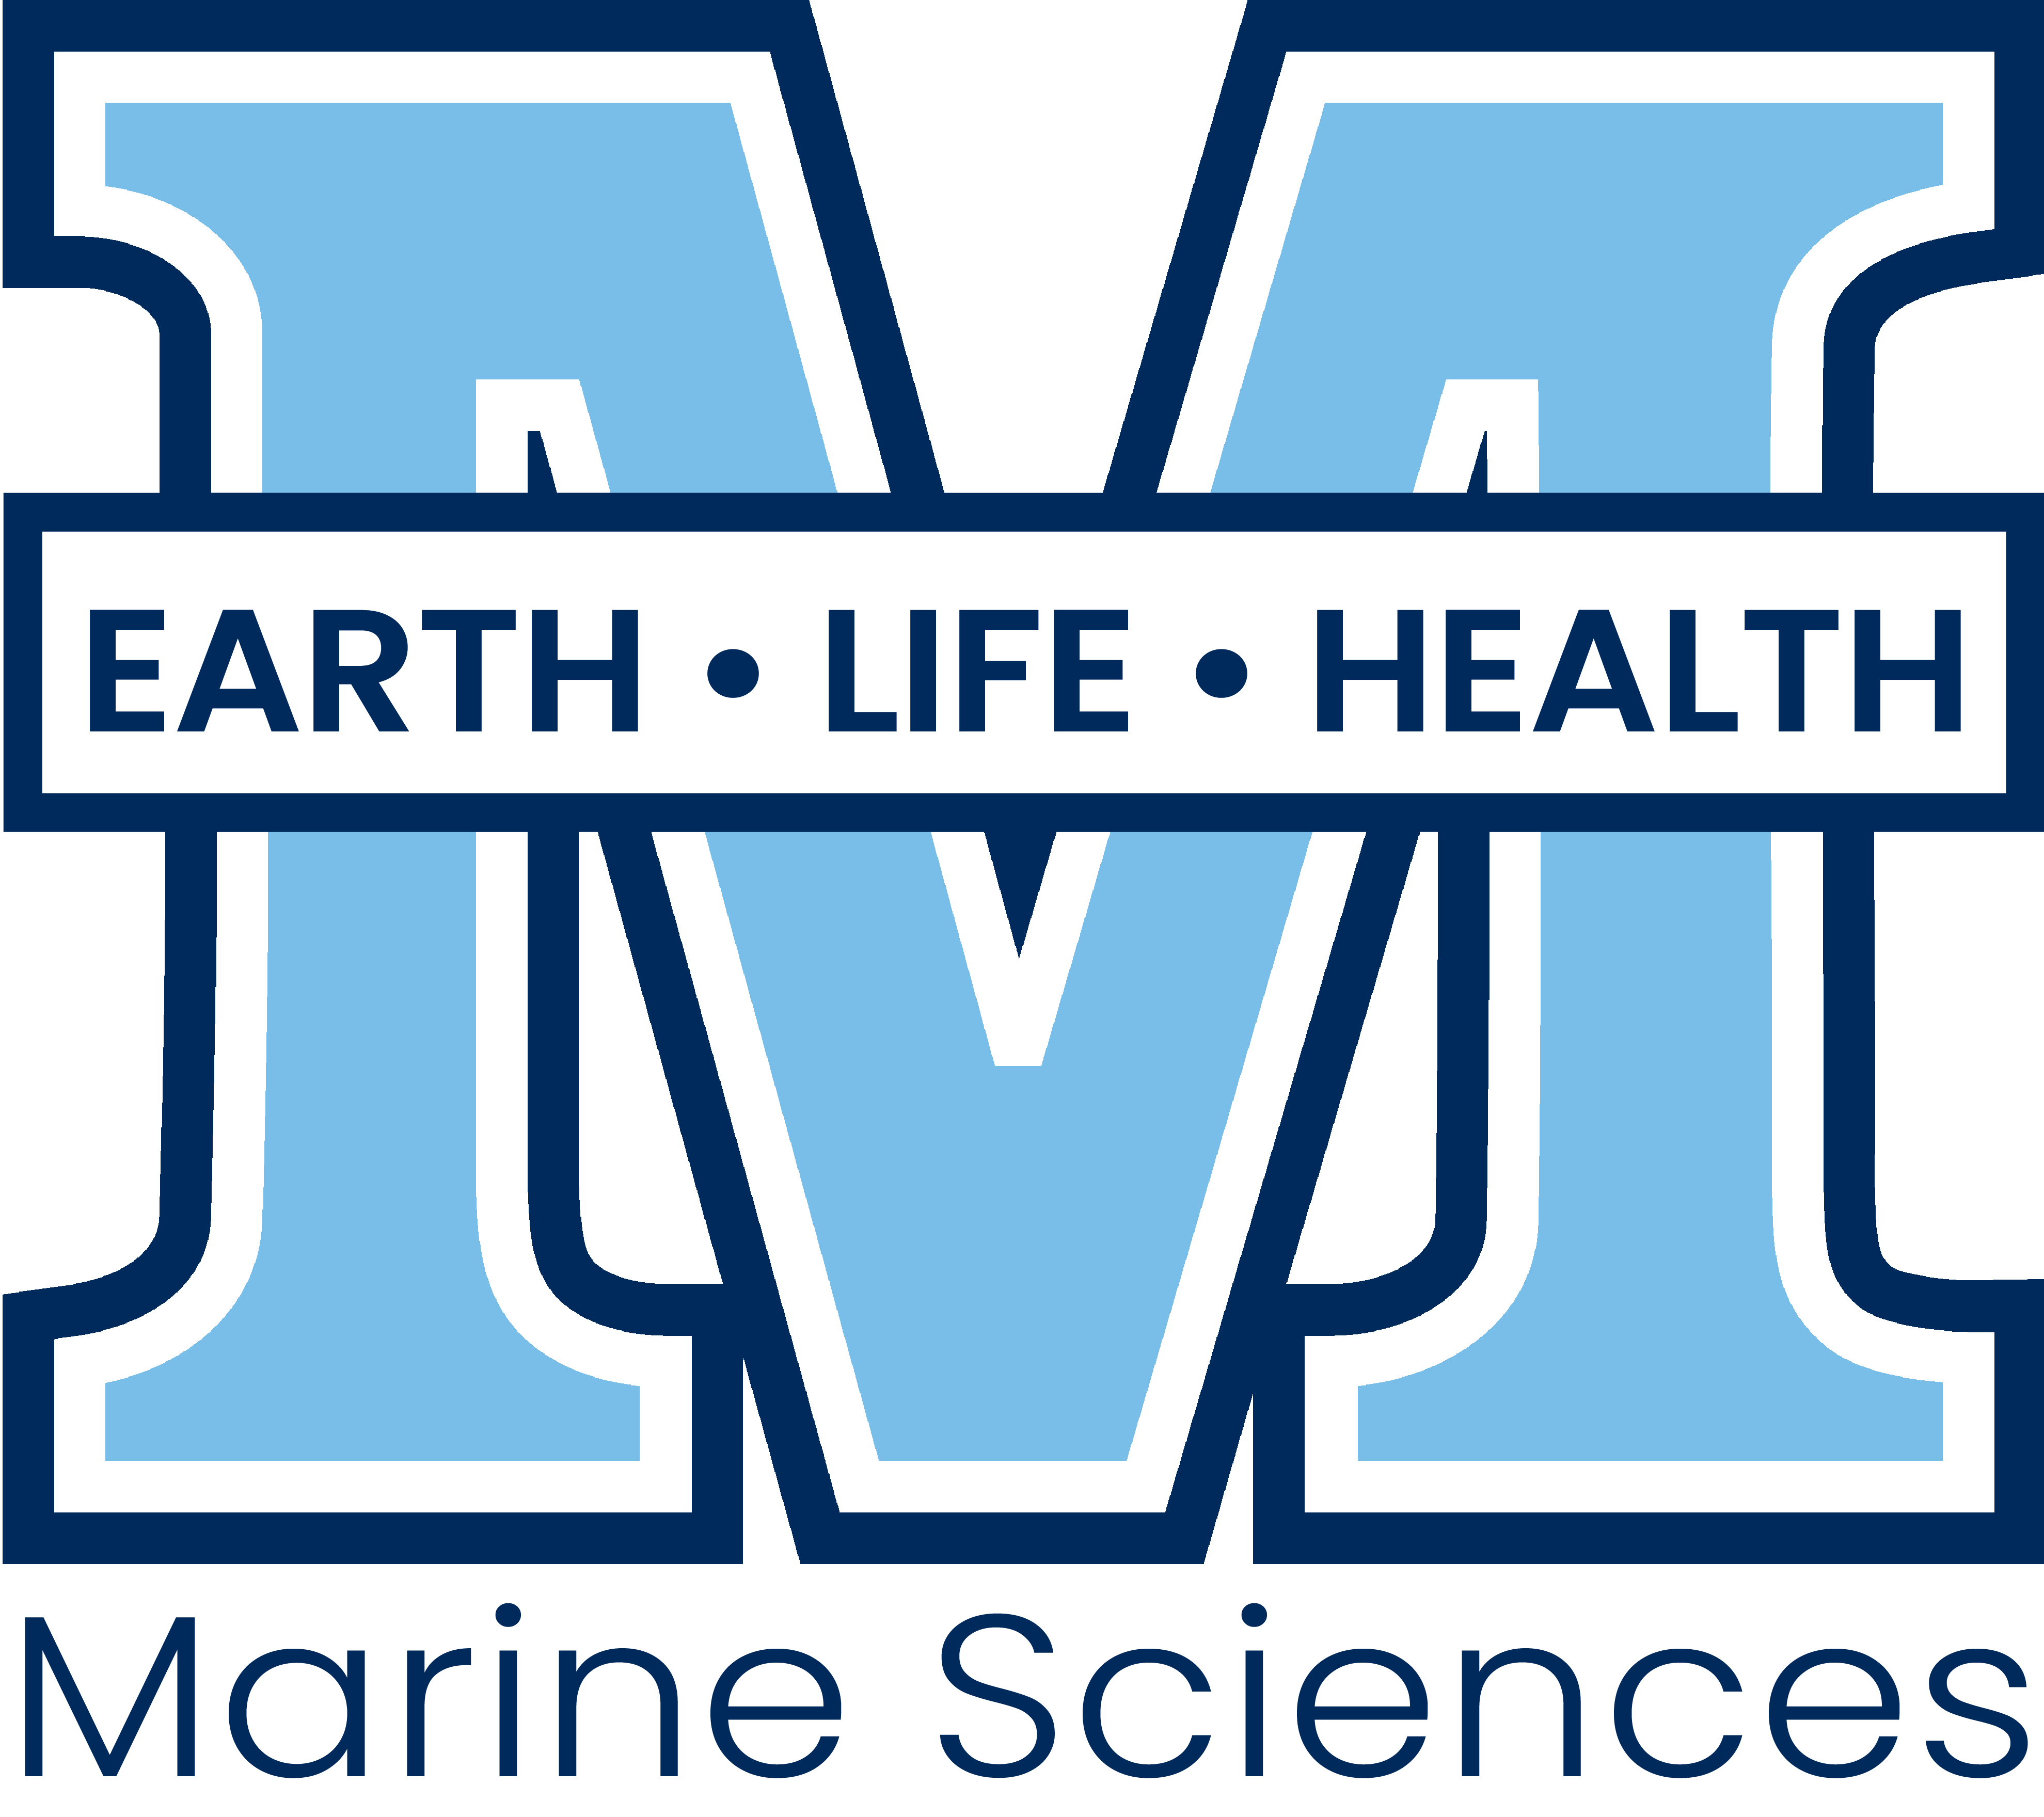 College M logo with marine sciences